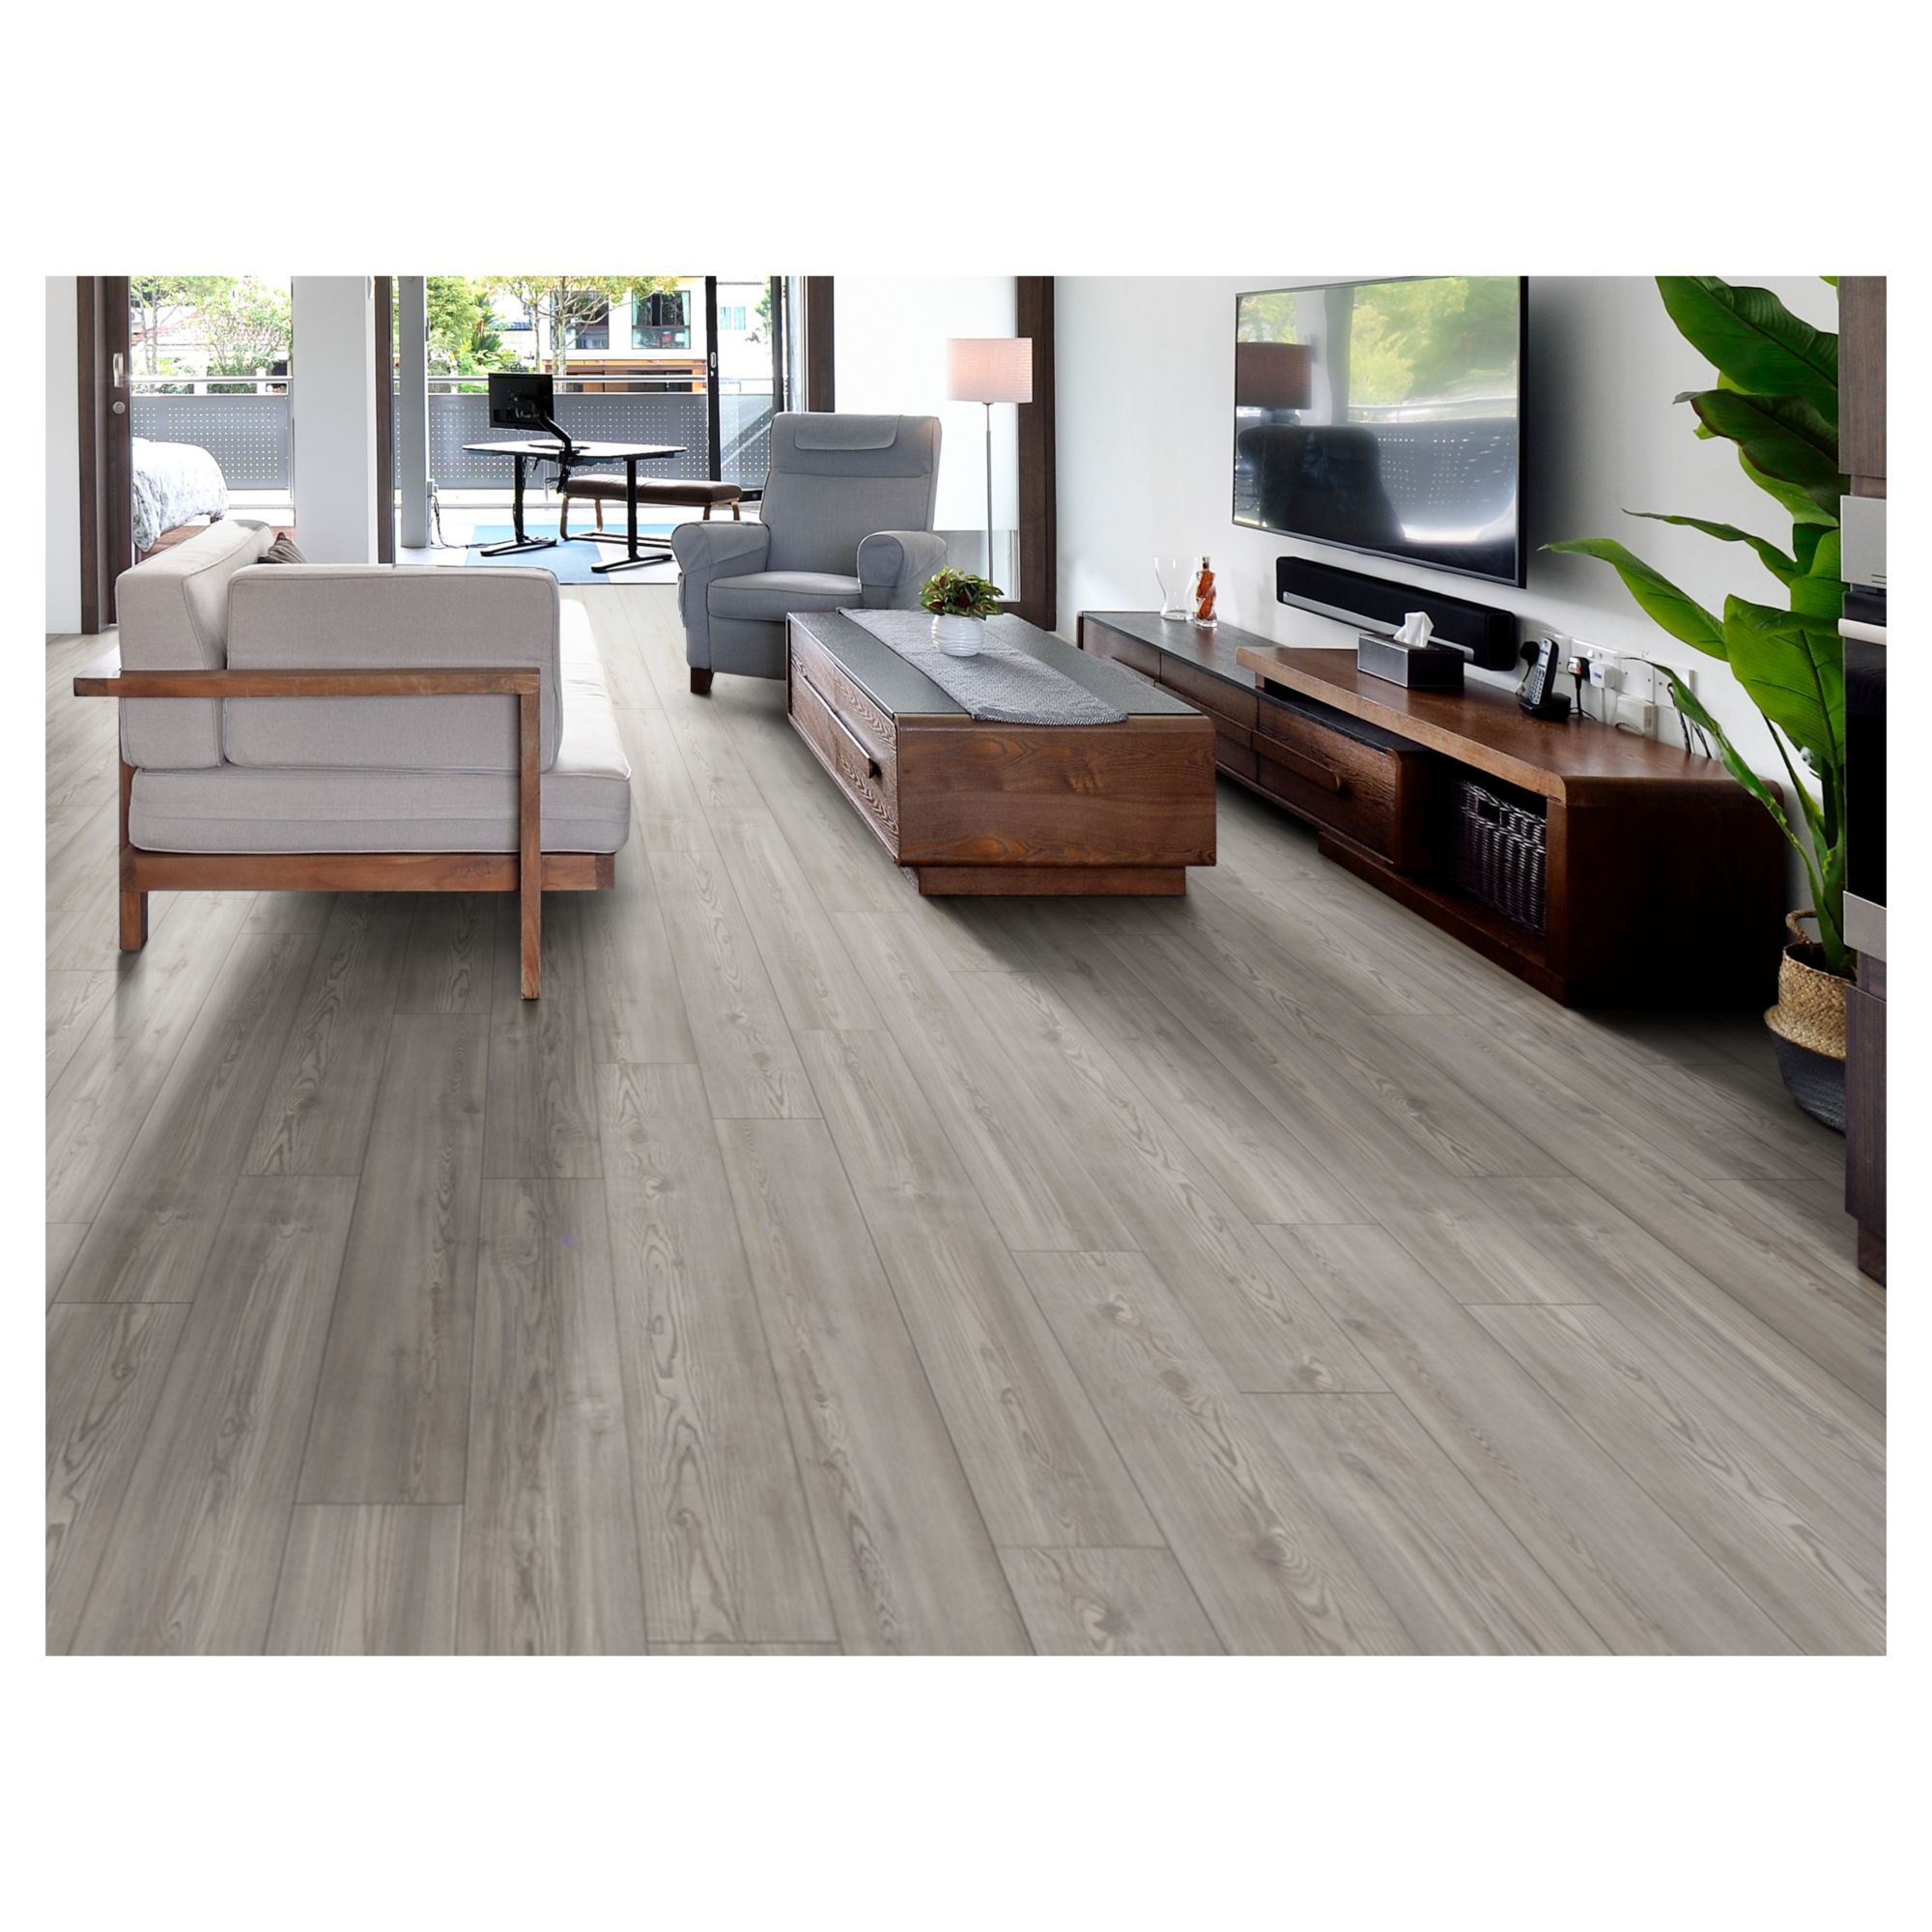 Shaw Floors Wayfinder Click Lock Waterproof Luxury Vinyl Plank Flooring - Ashen Pine